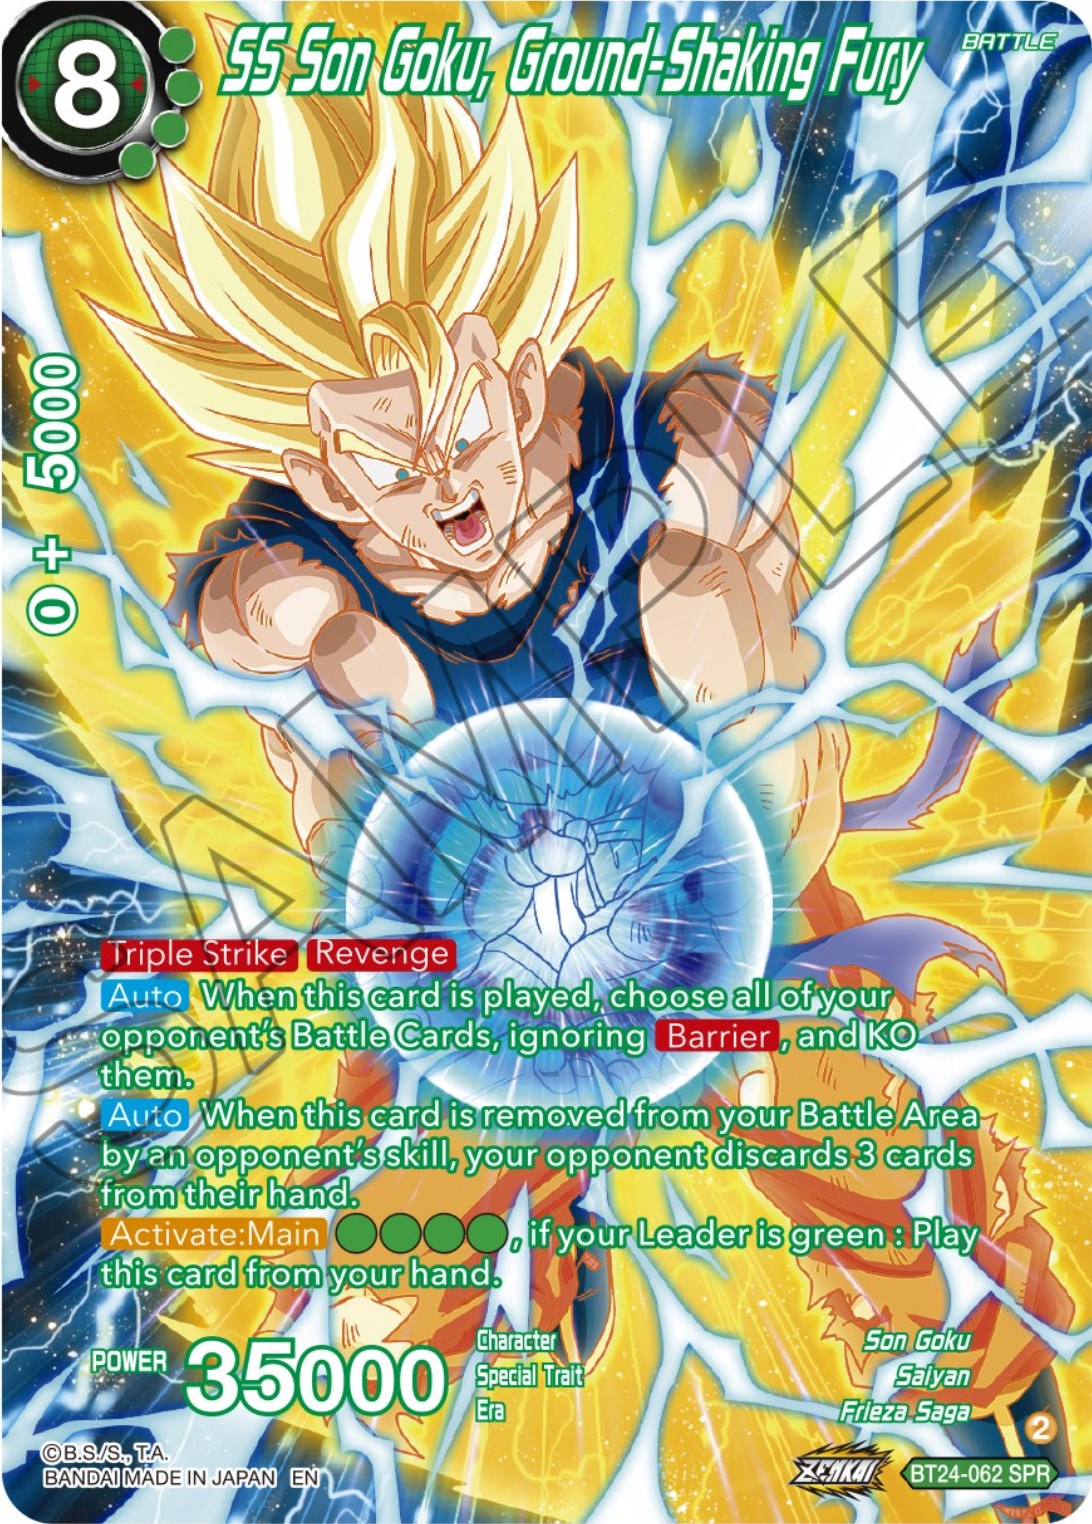 SS Son Goku, Ground-Shaking Fury (SPR) (BT24-062) [Beyond Generations] | Pegasus Games WI